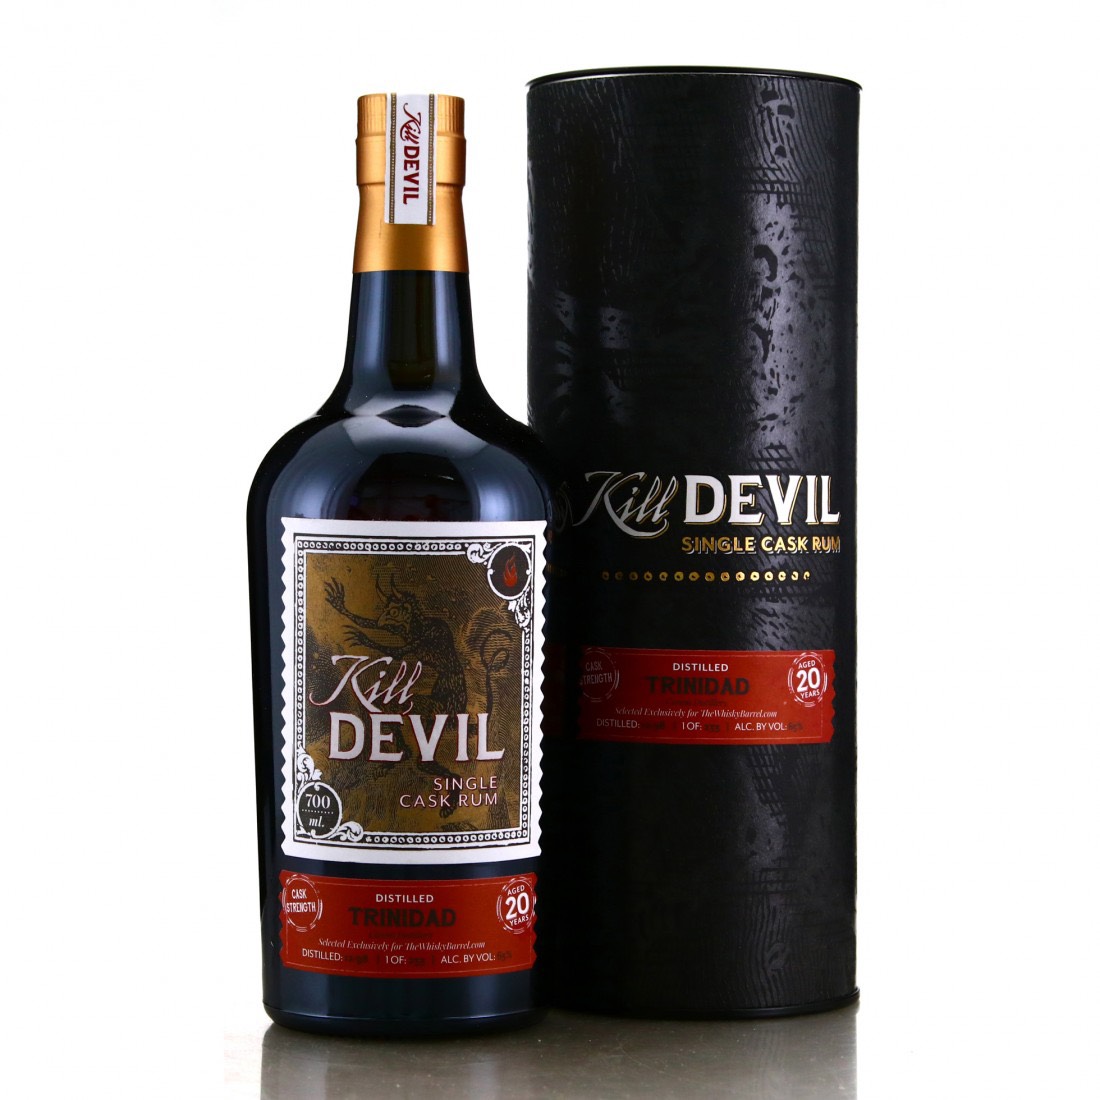 Bottle image of Kill Devil (The Whisky Barrel) HTR